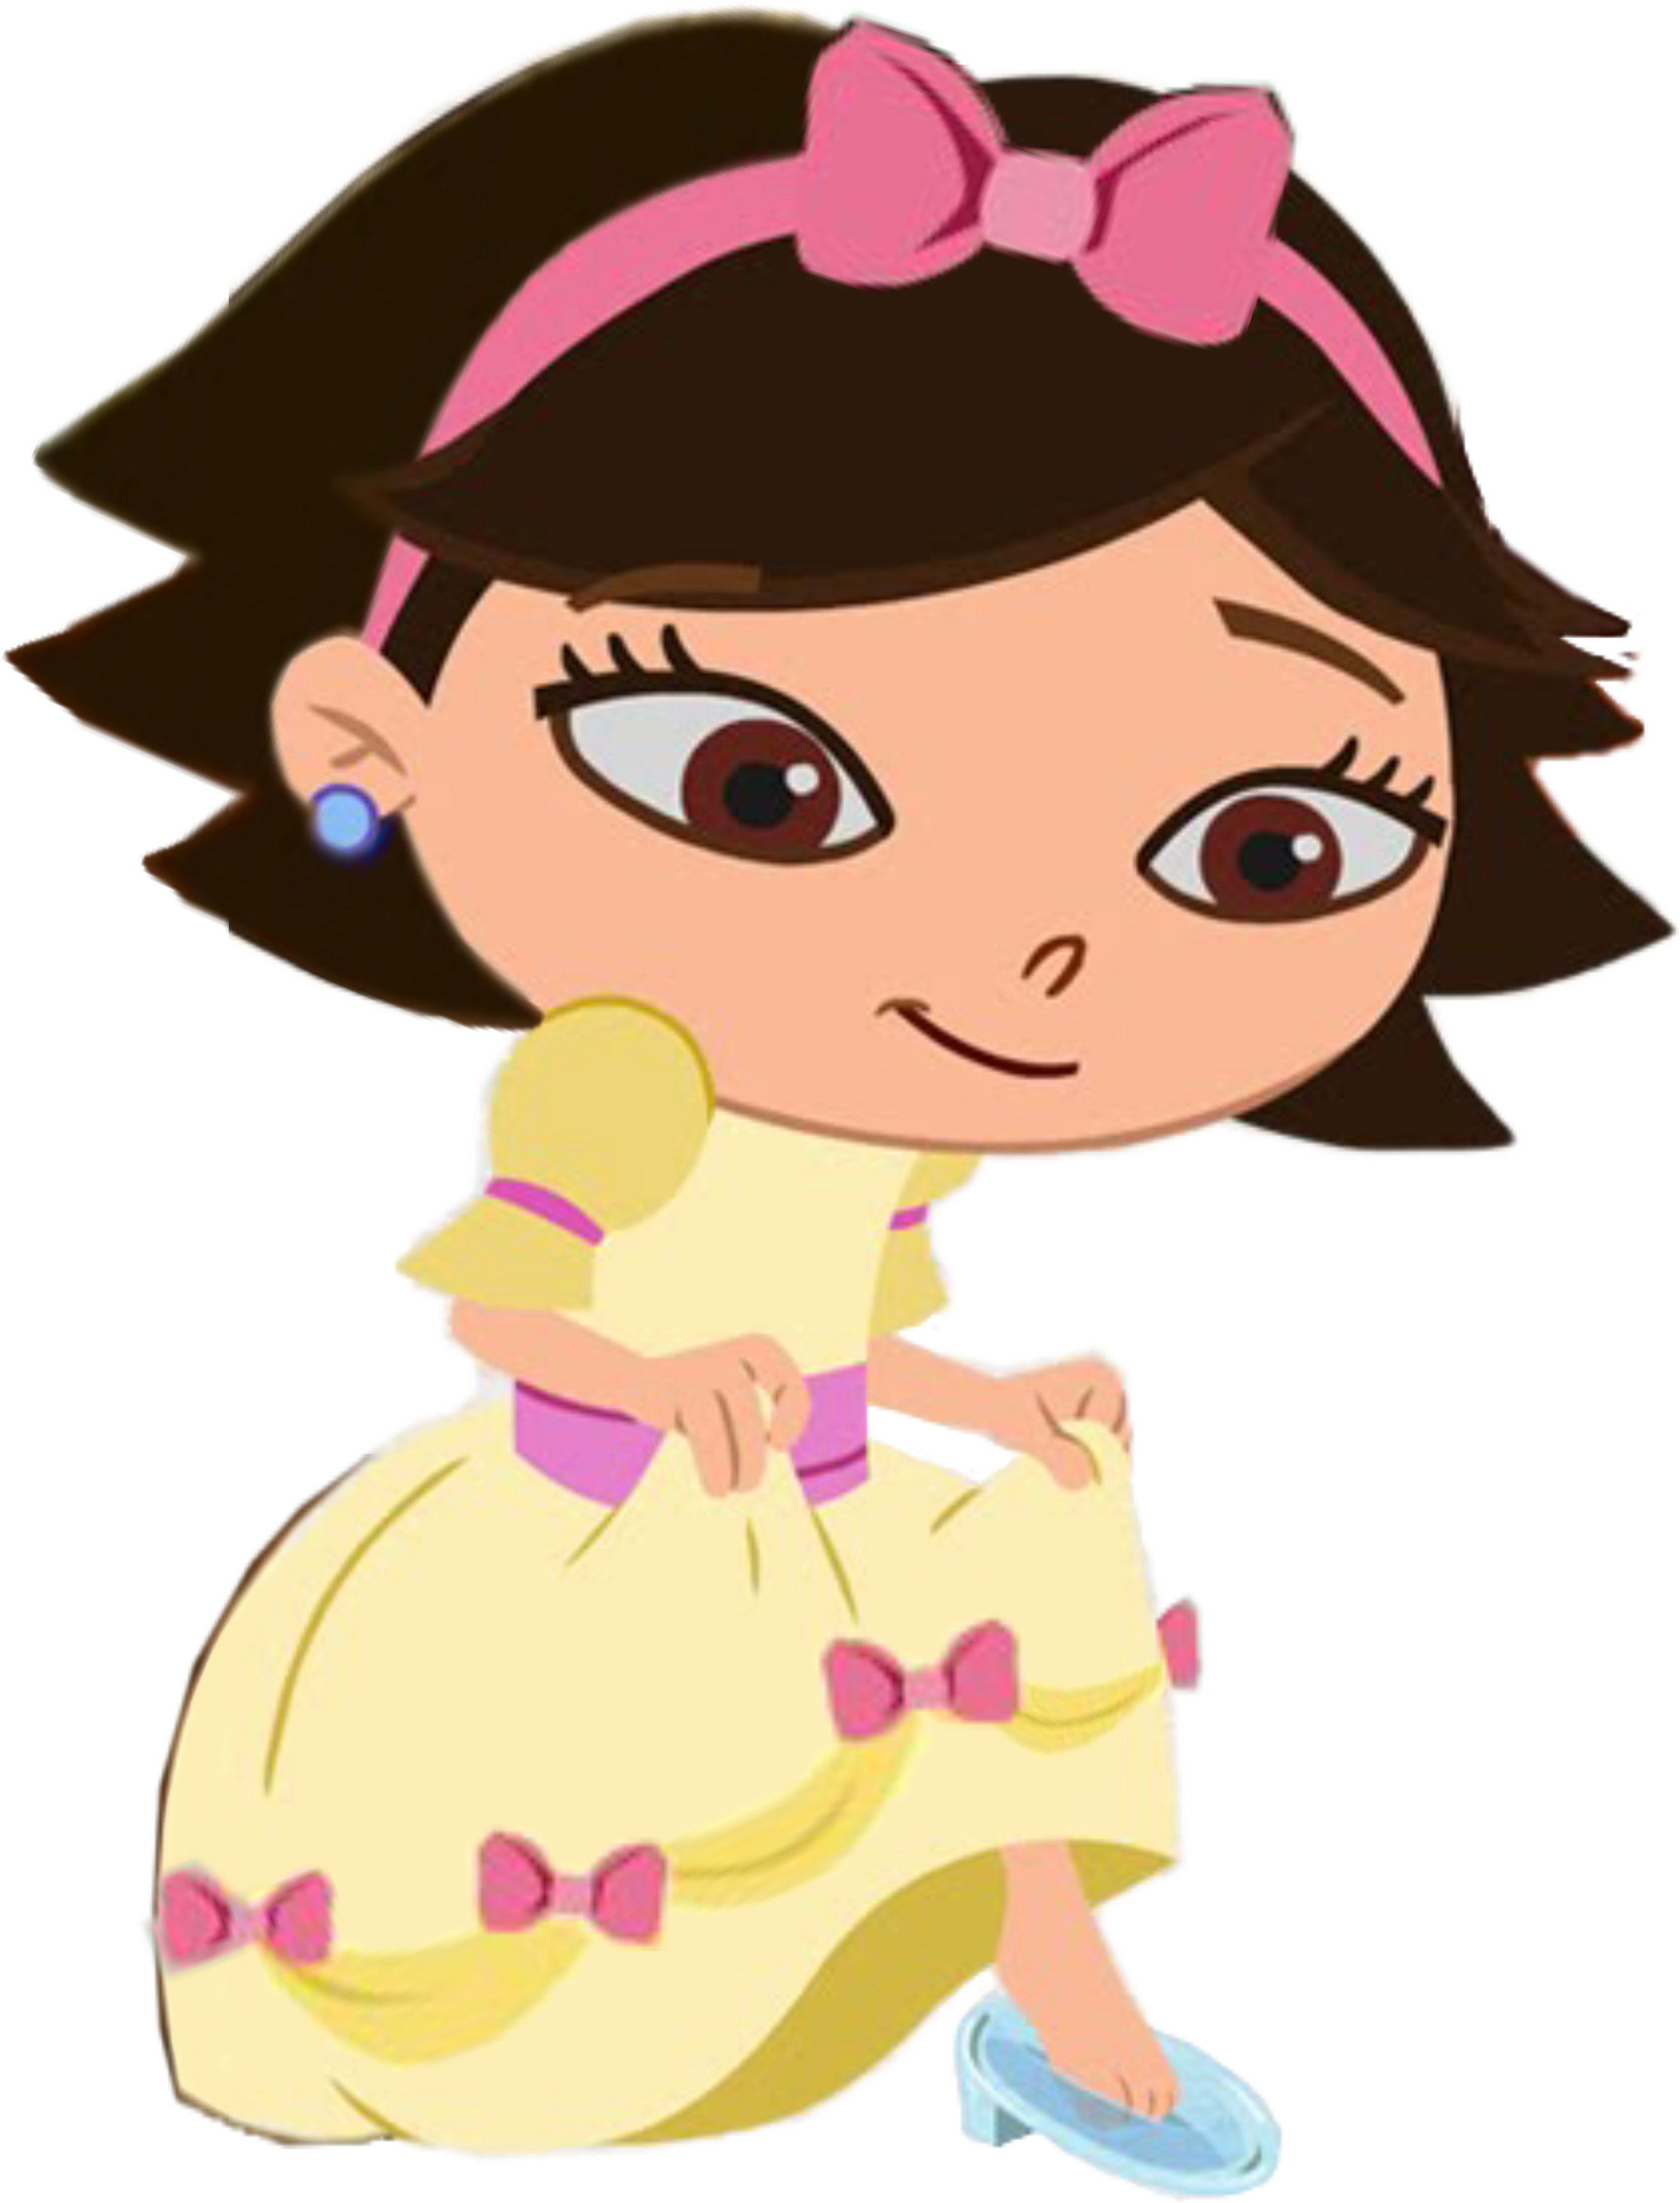 Animated Girlin Yellow Dress PNG